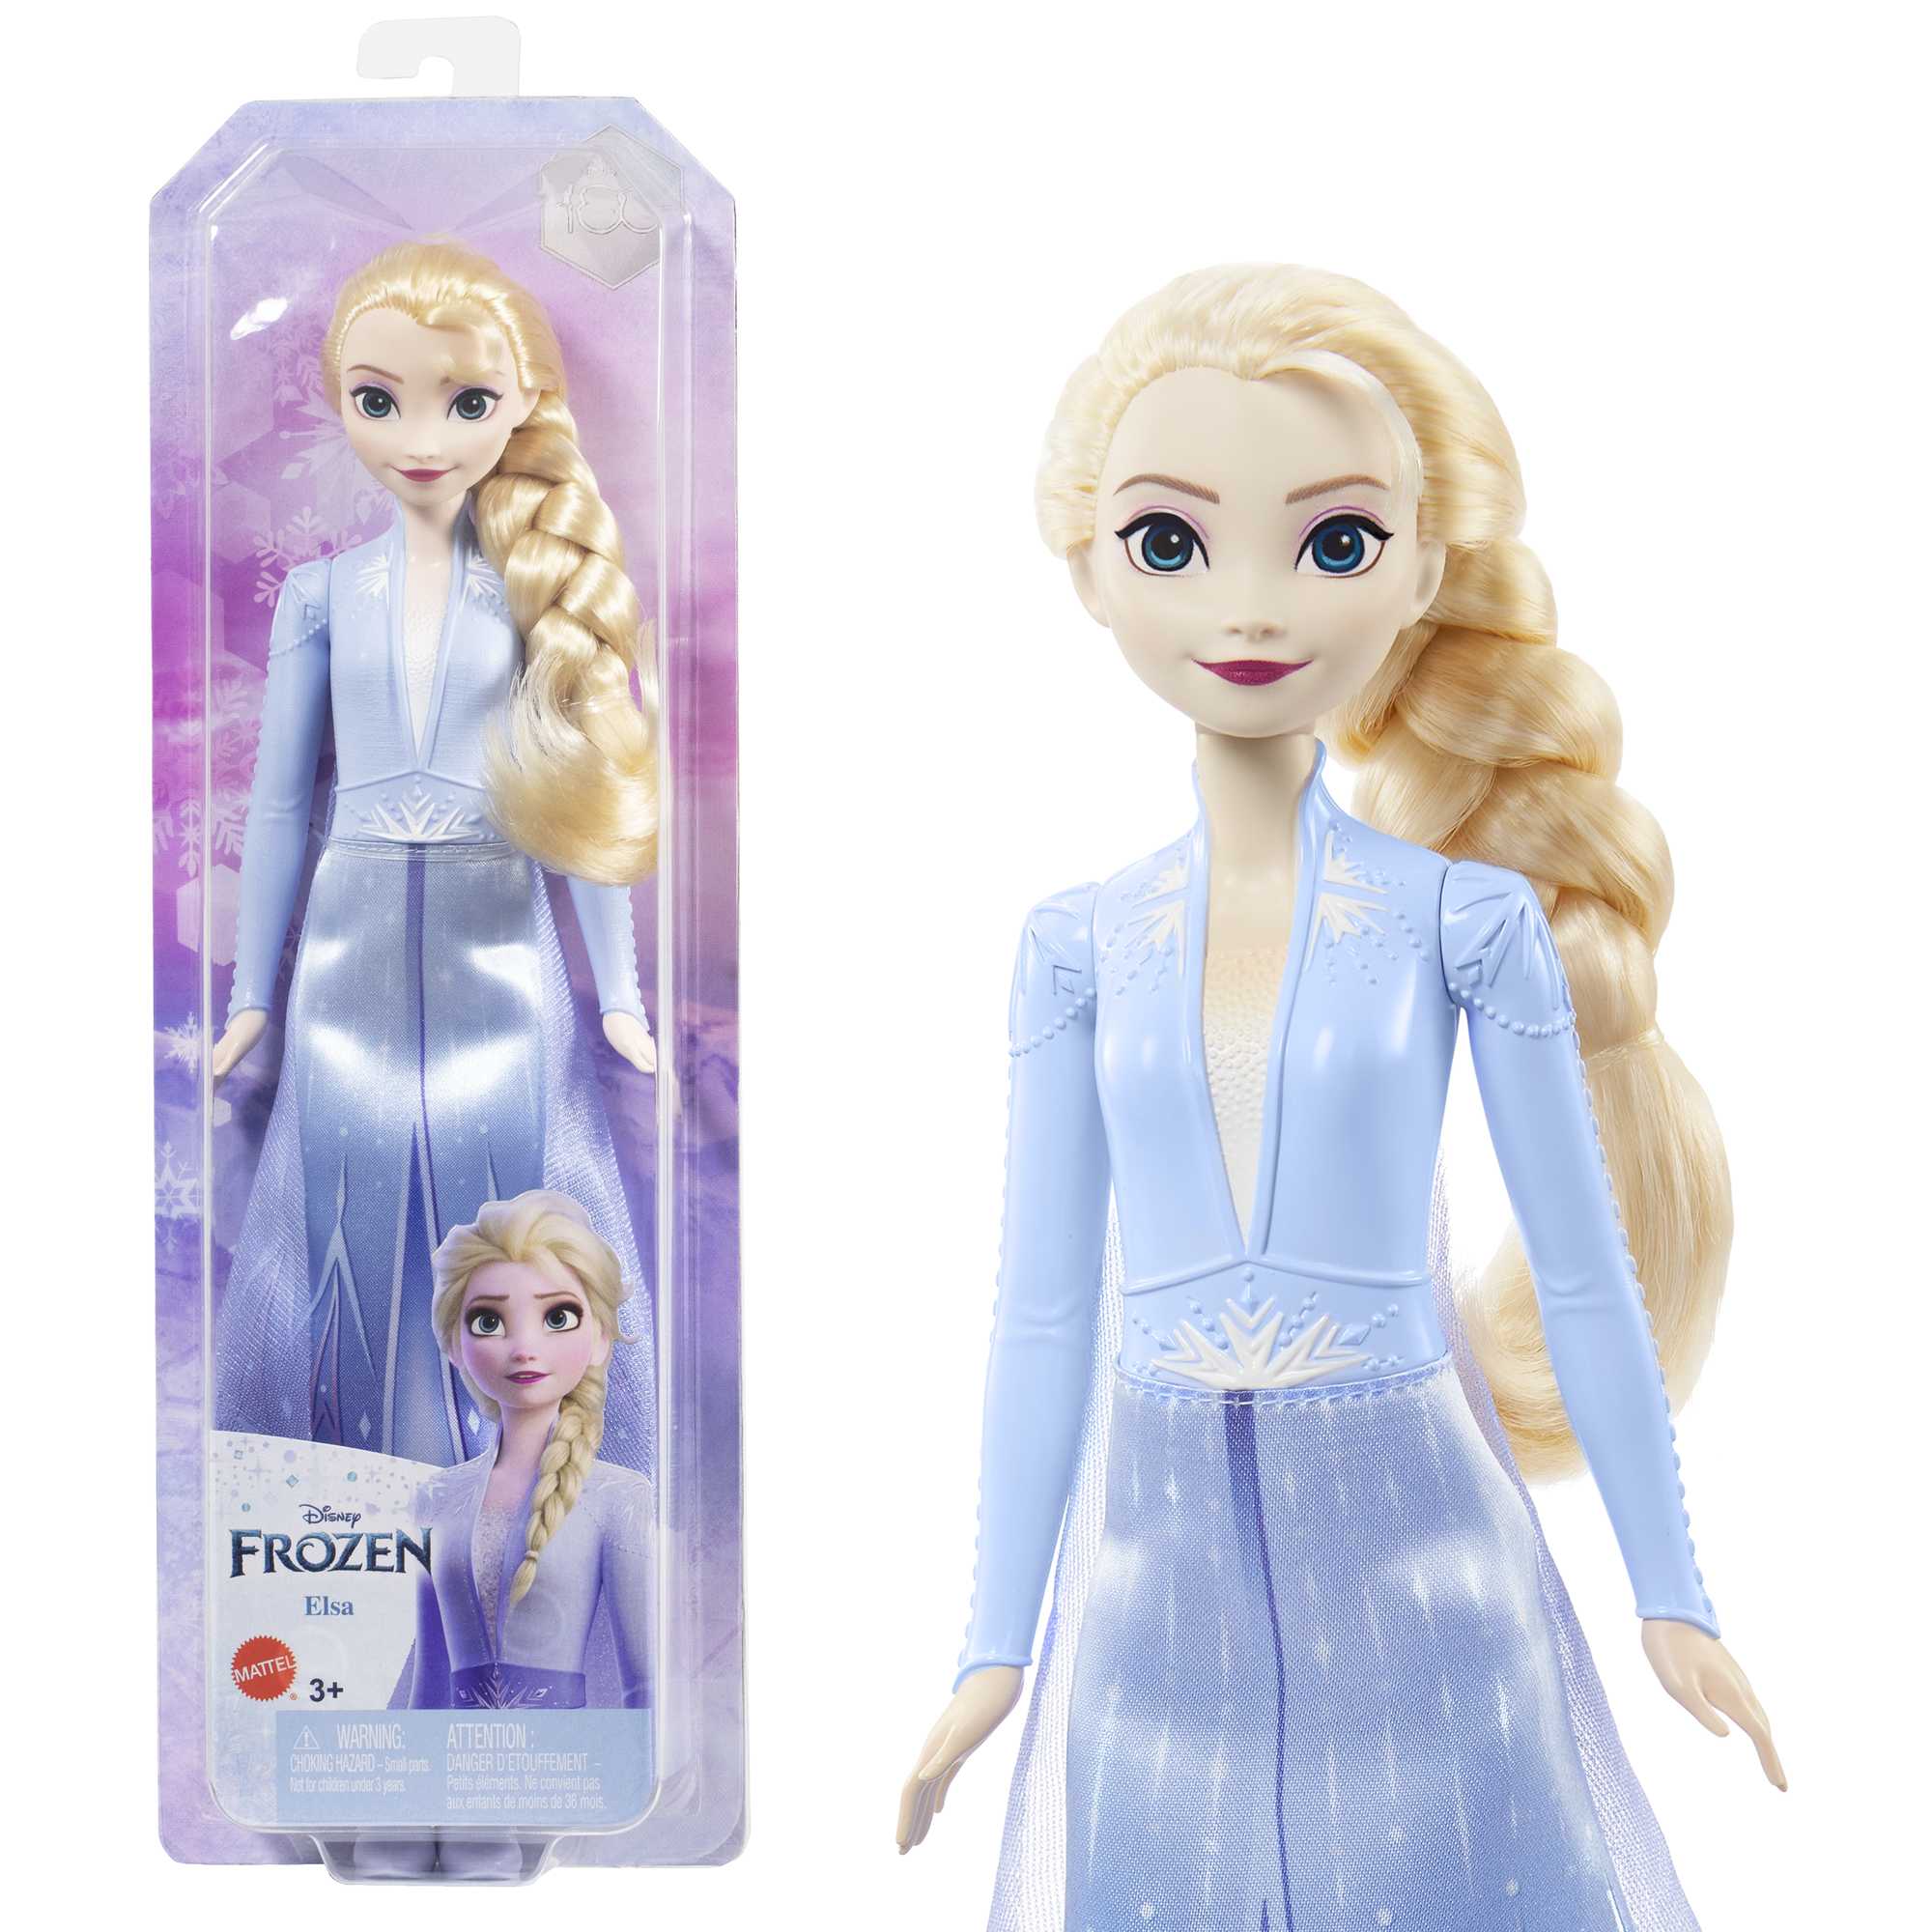 Figurines La Reine des Neiges 2 - DISNEY FROZEN - Anna, Elsa